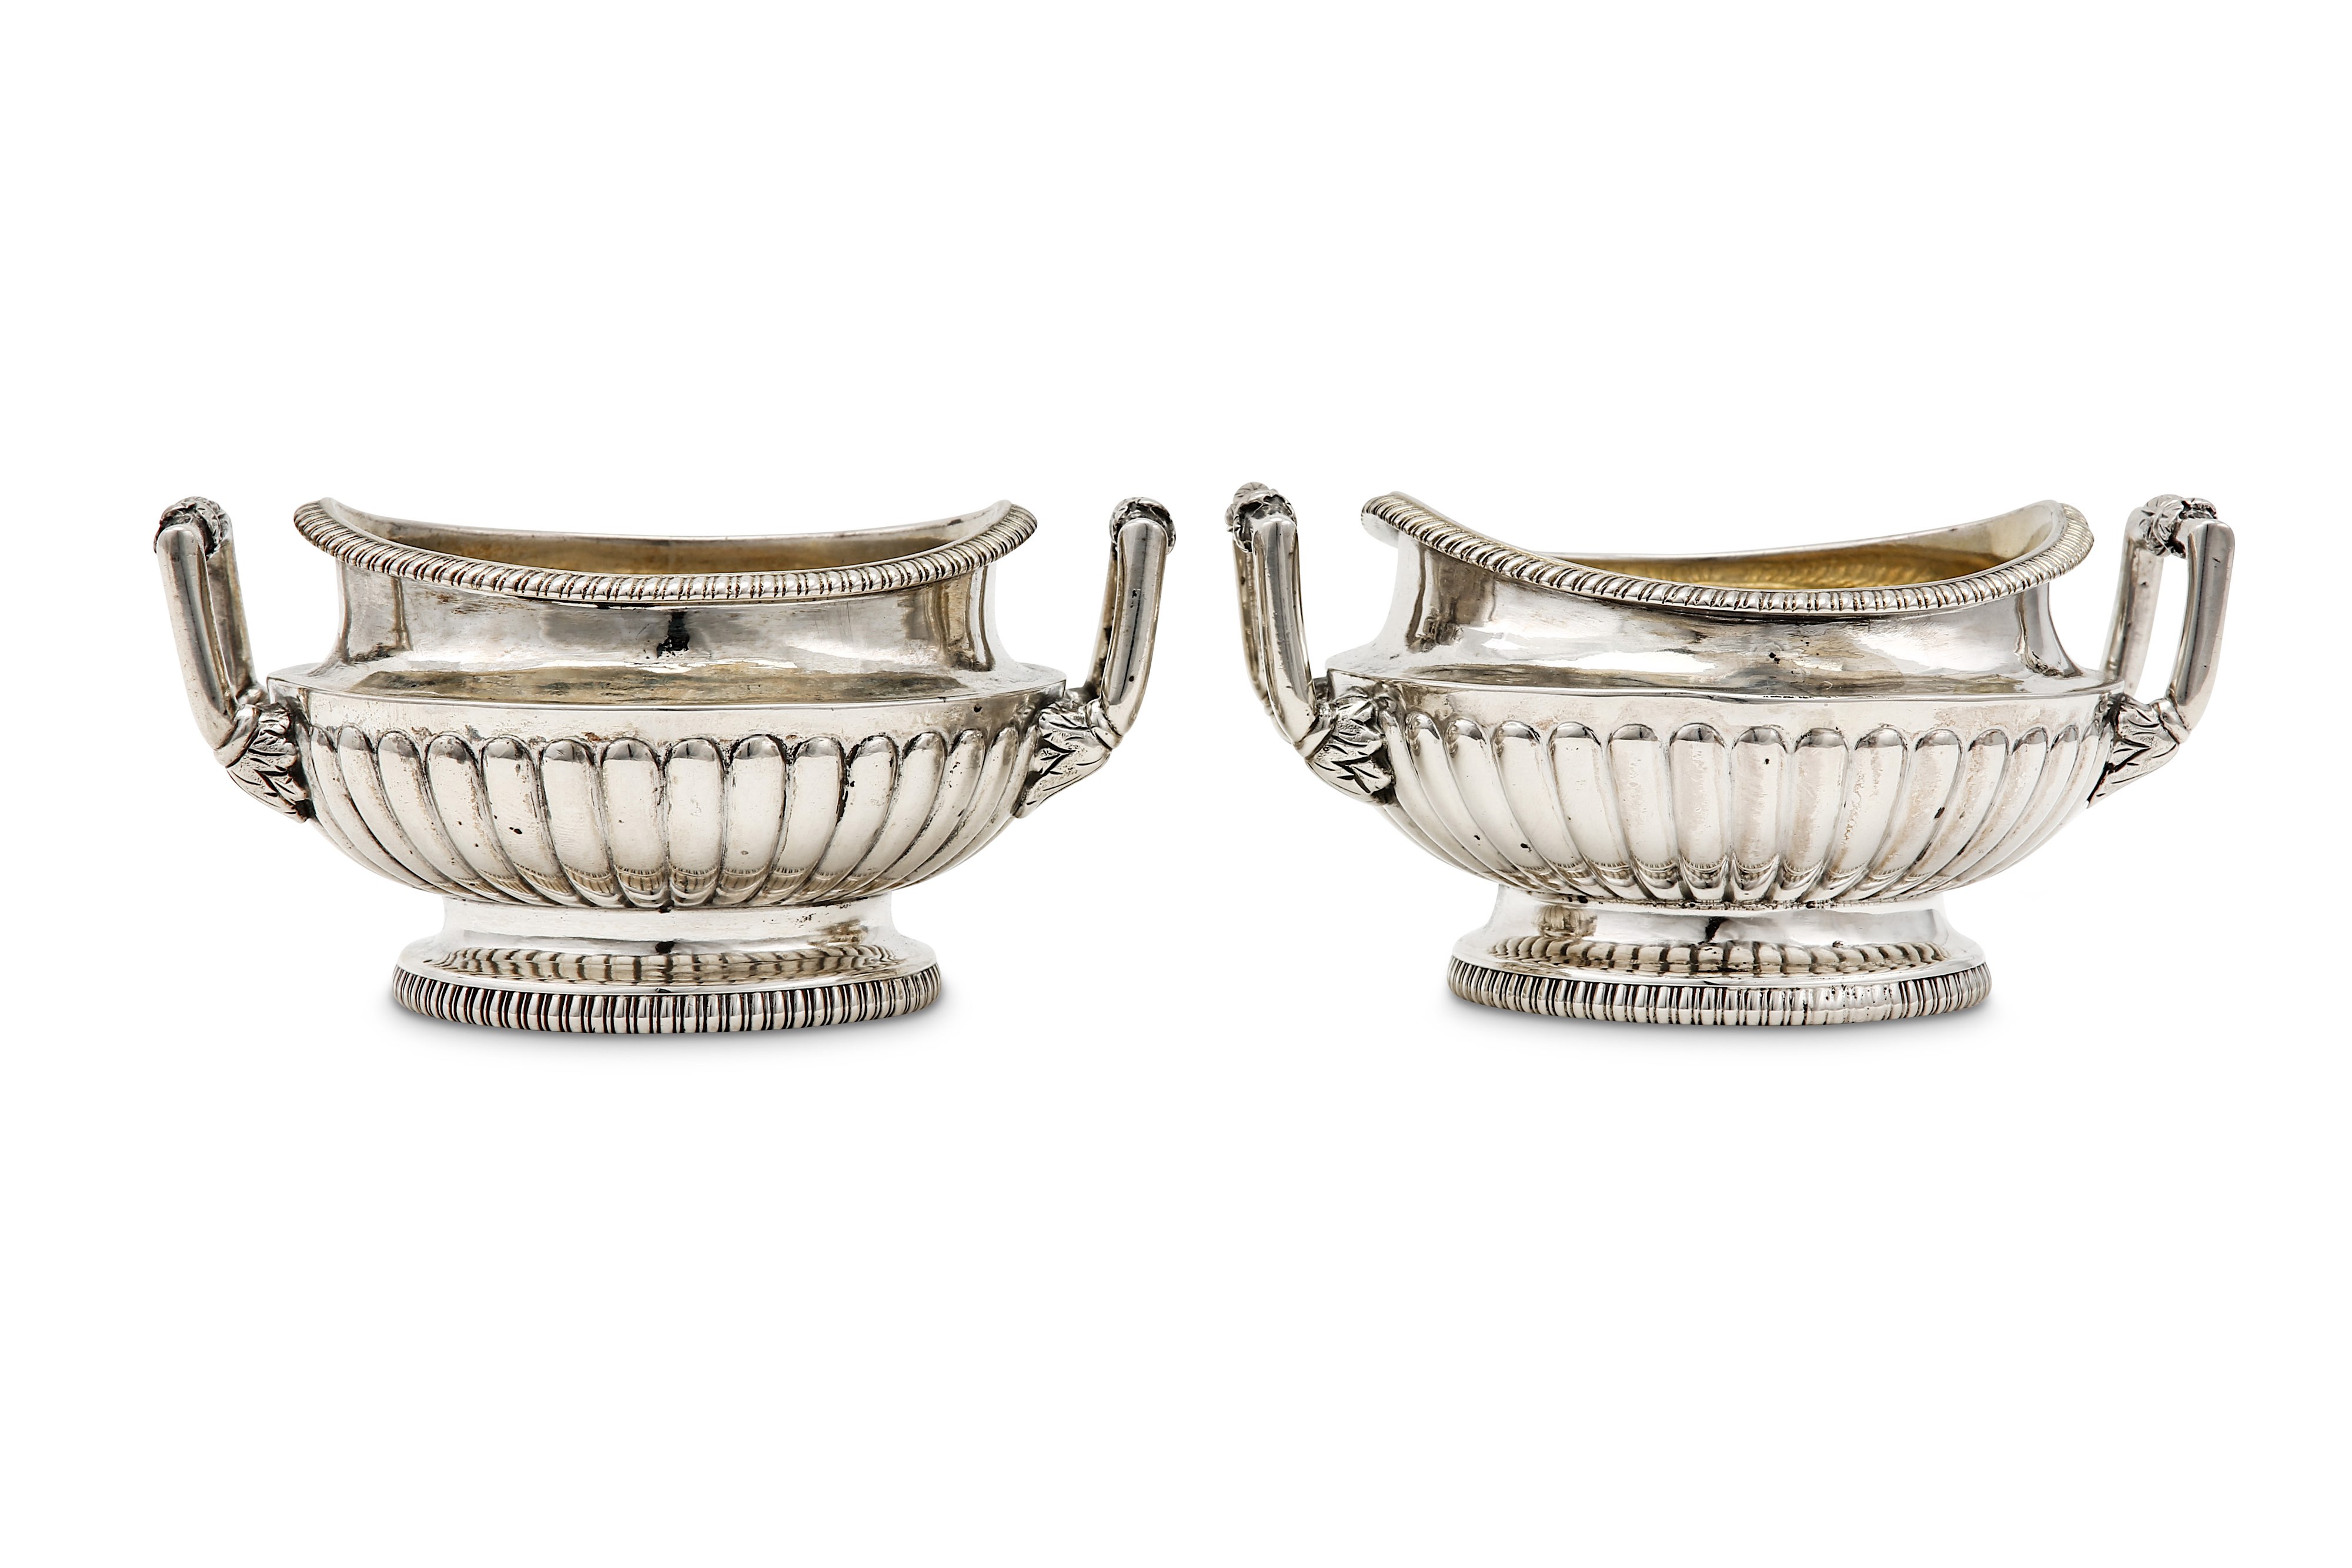 A pair of George III sterling silver twin handled salts, London 1806 by Daniel Pontifex (reg. Sep 17 - Image 2 of 3